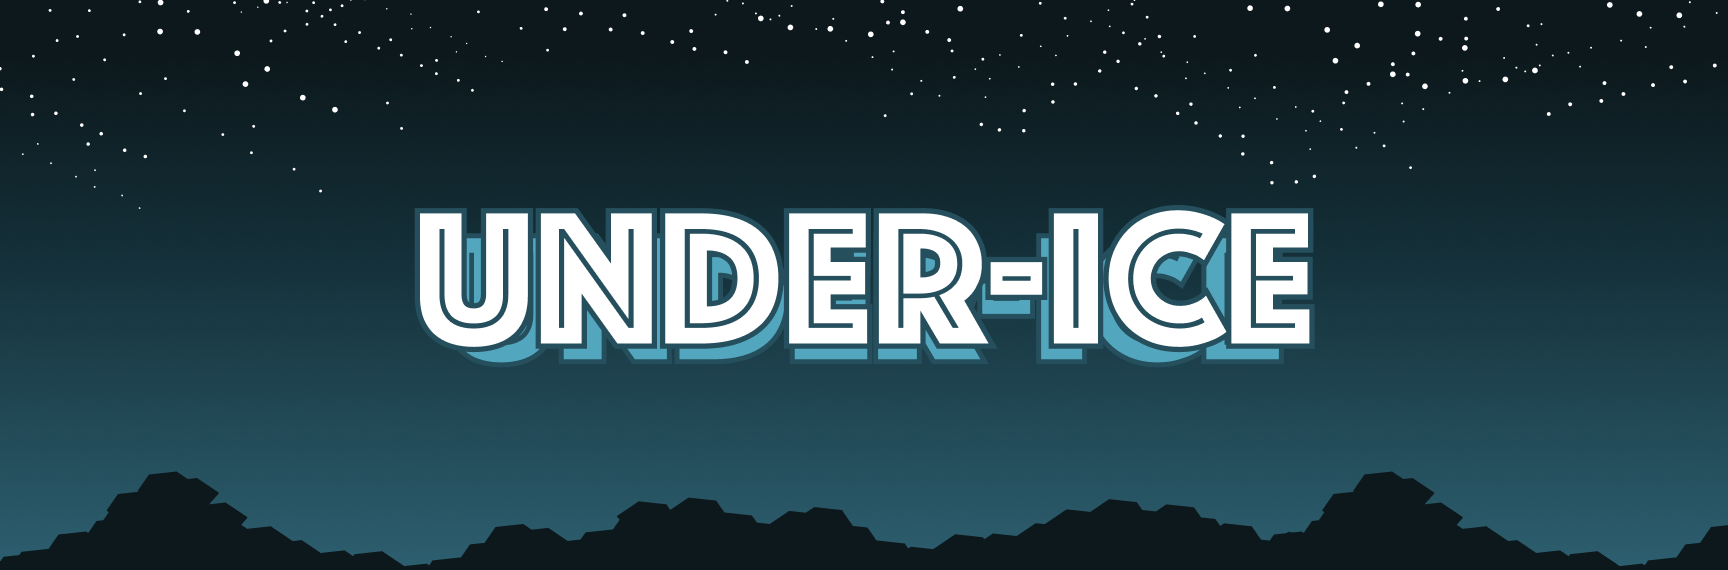 Under-Ice